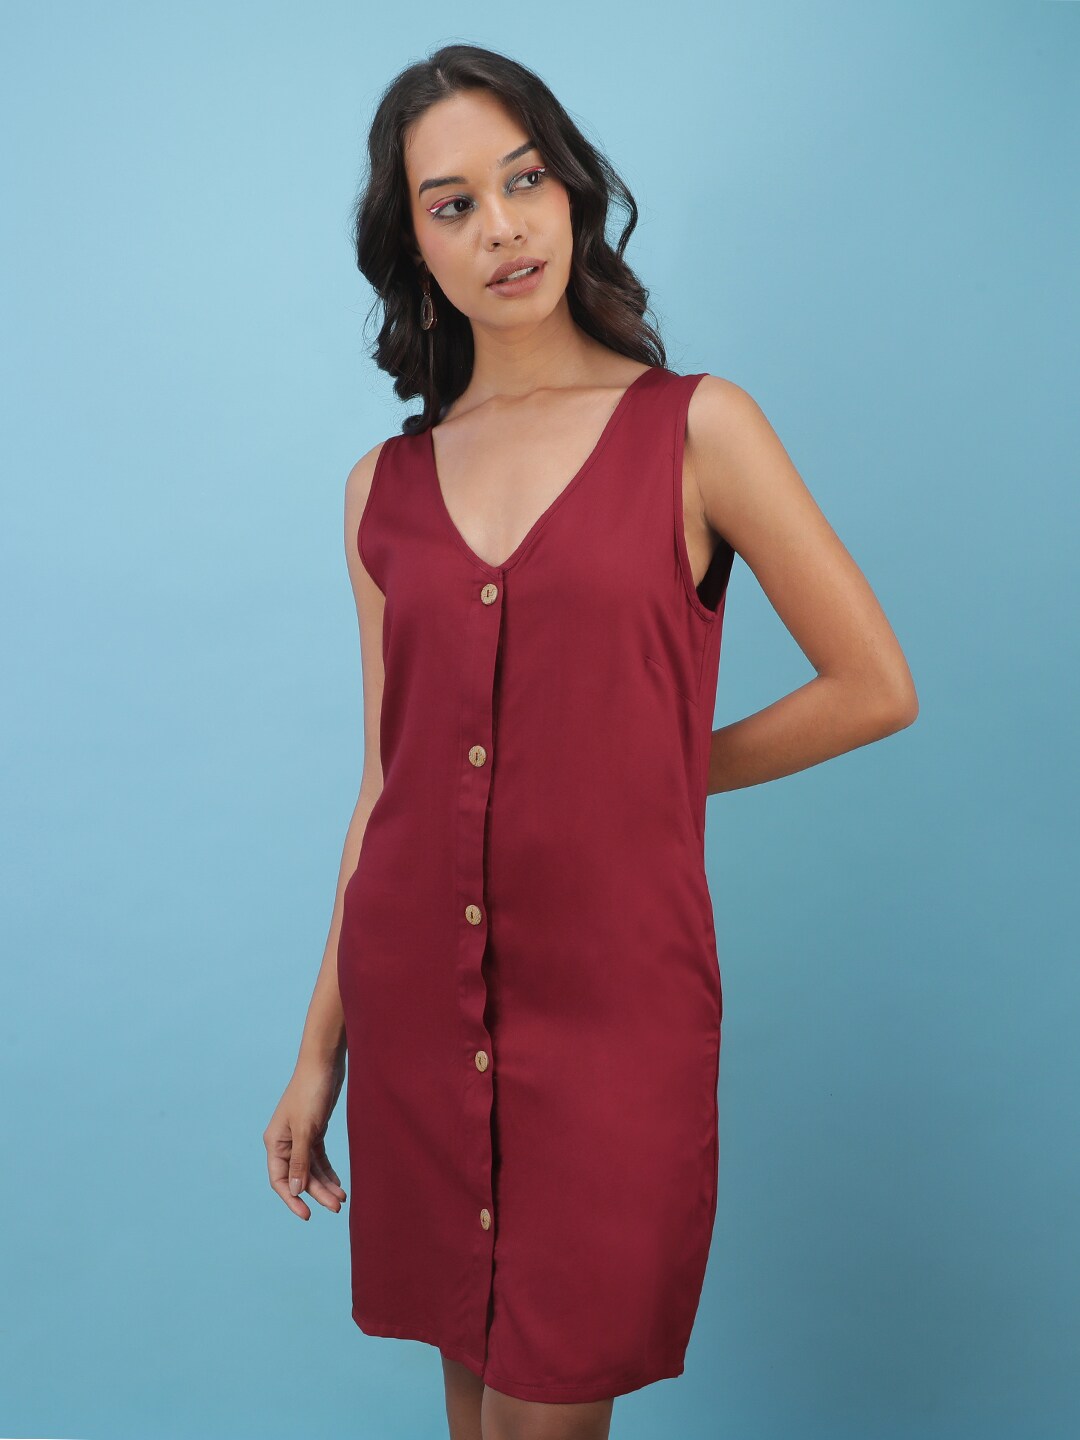 Shop Women Solid Striped A-Line Dress Online.